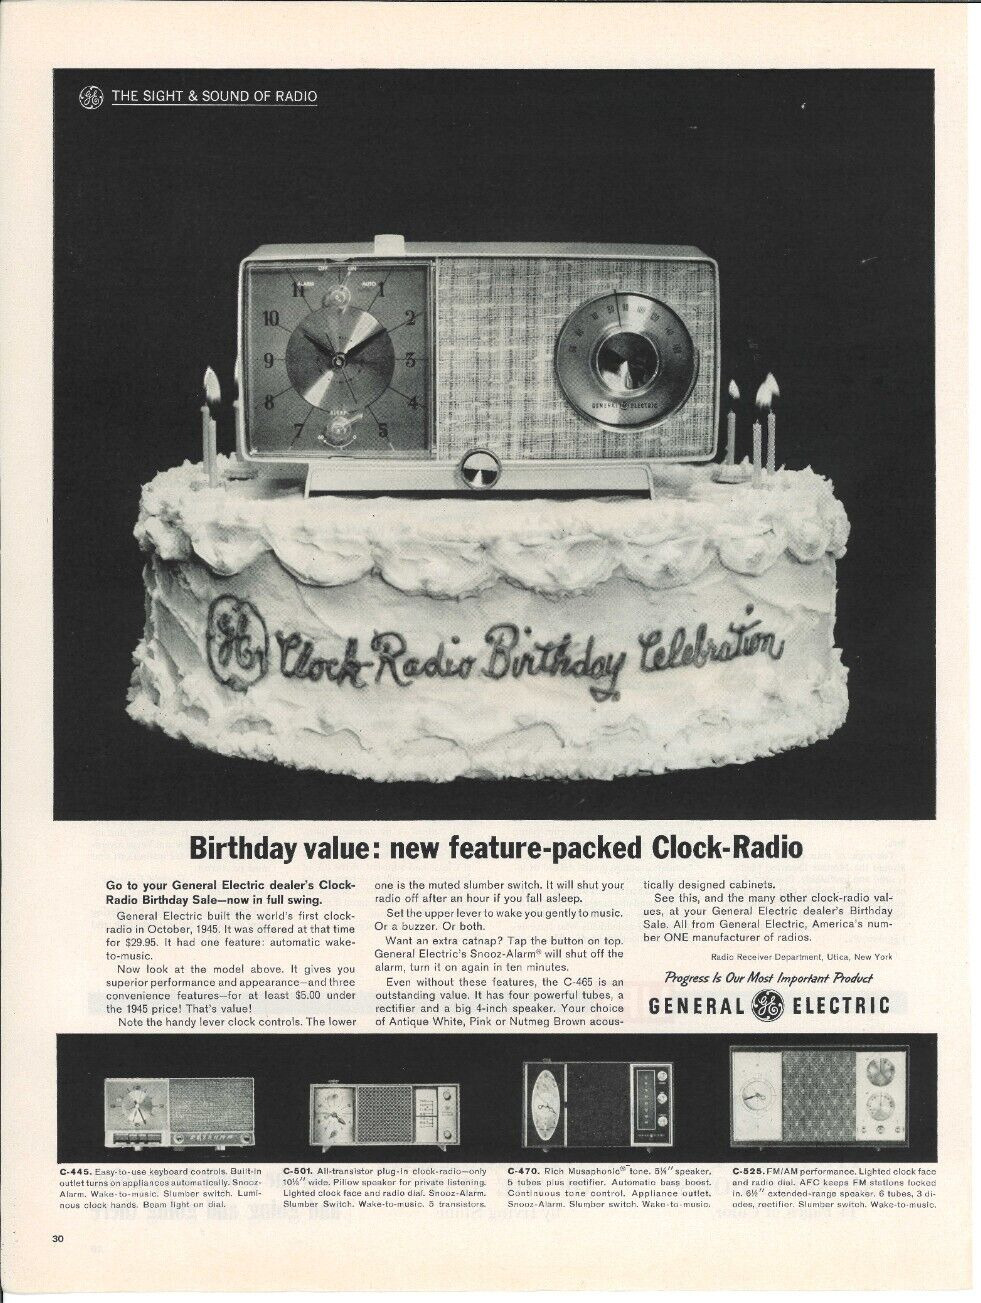 1962 GE General Electric Clock Radio Birthday Celebration Cake Vintage Print Ad